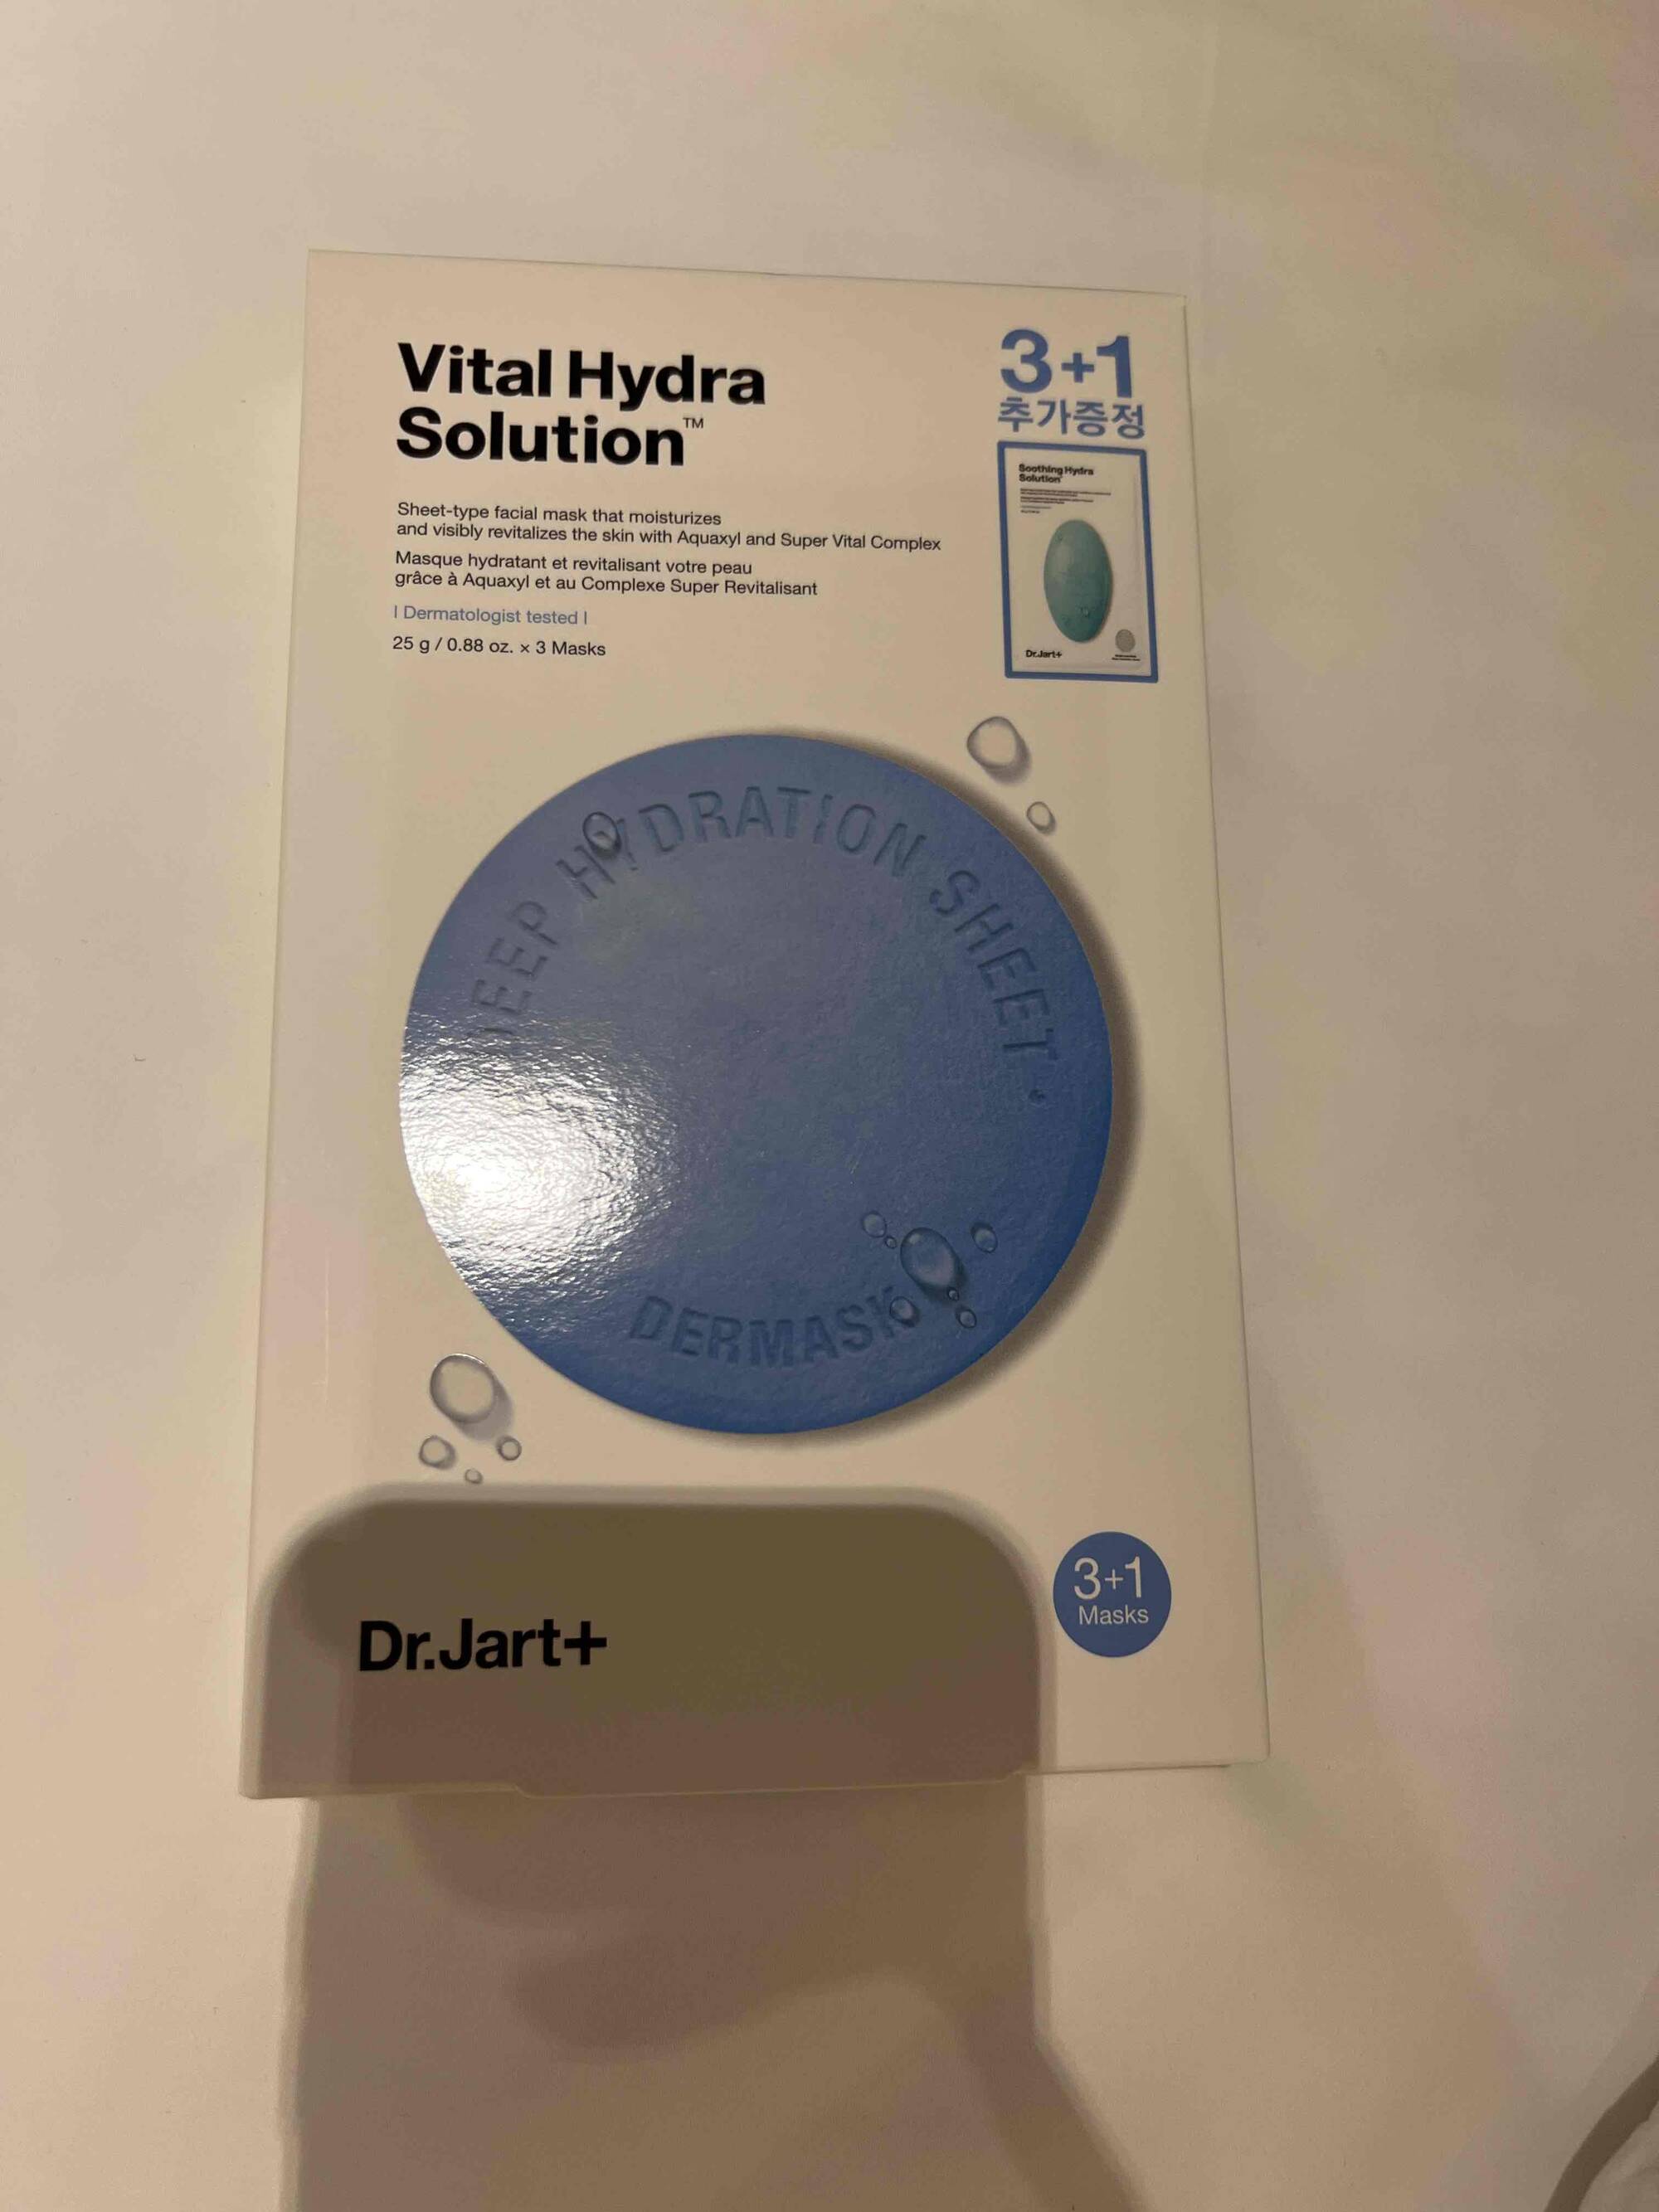 DR.JART+ - Vita hydra solution - Dermask